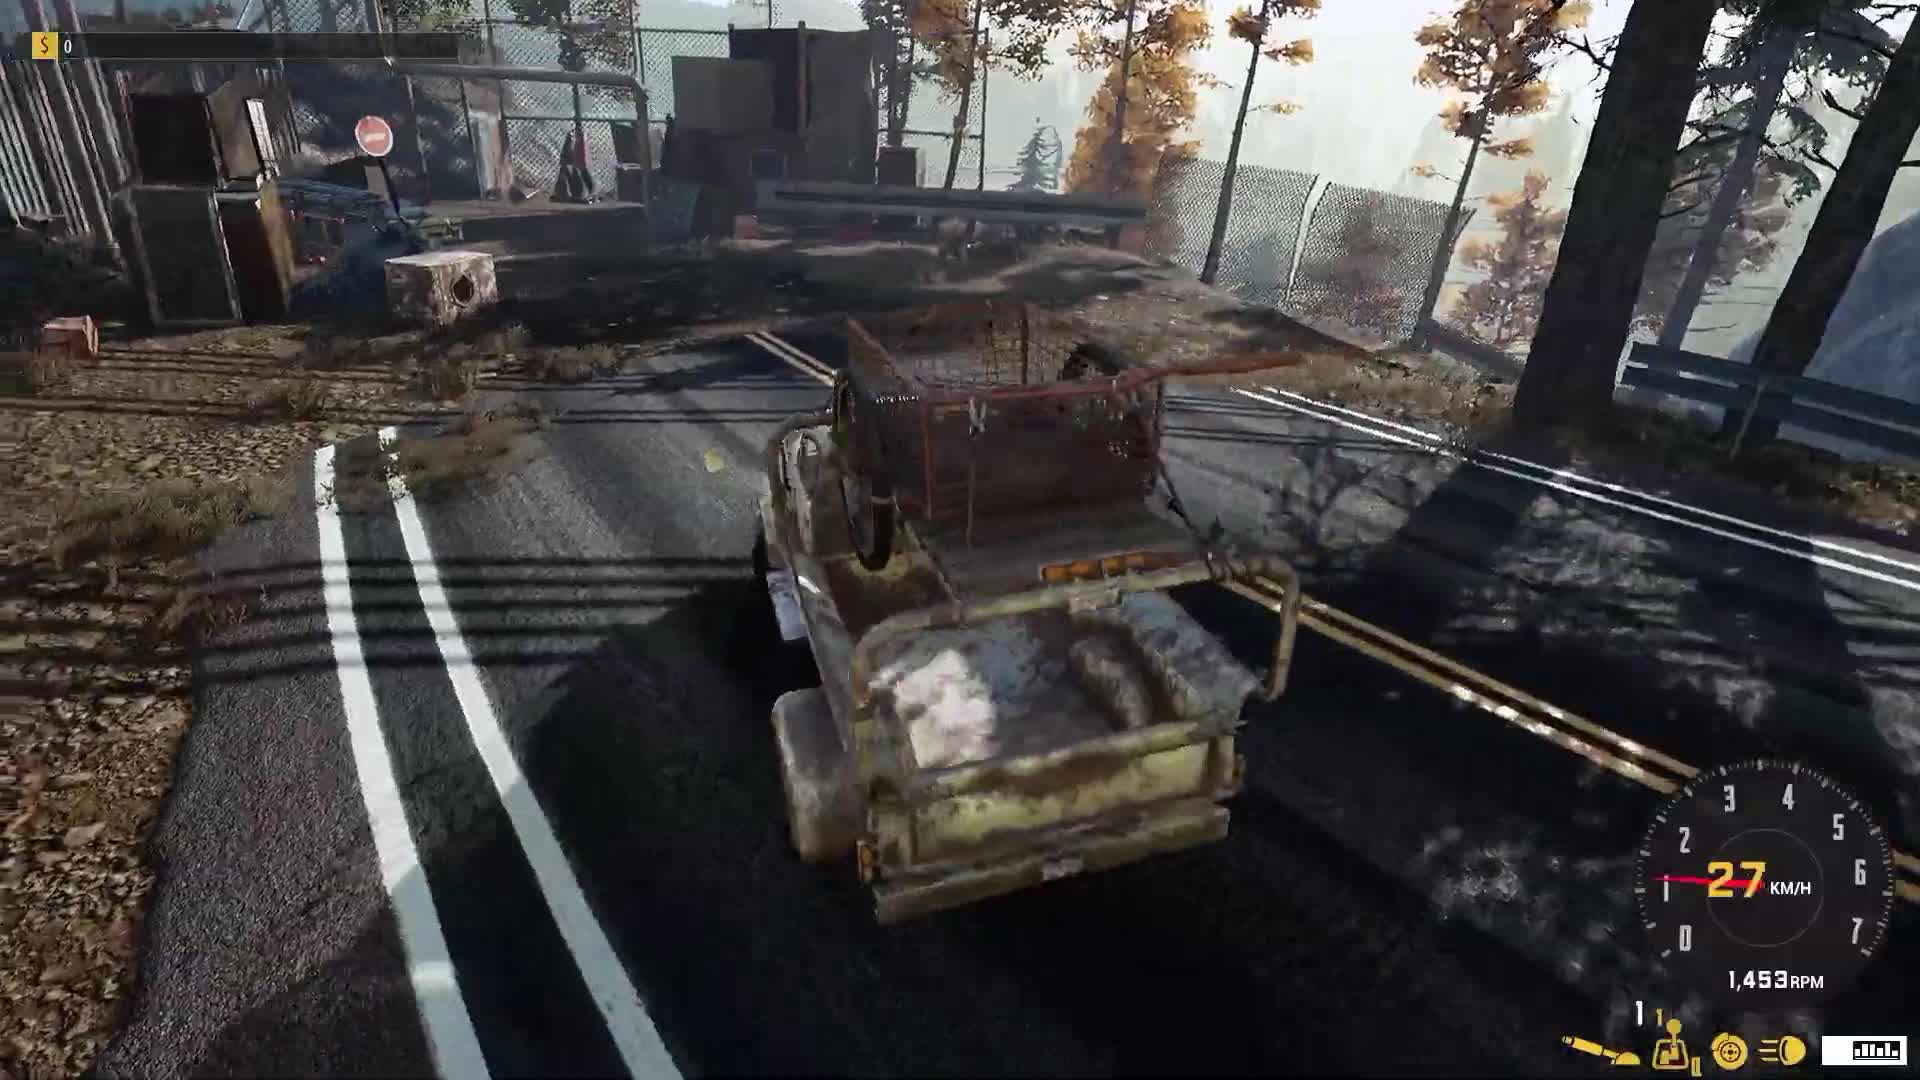 Junkyard Simulator - Vehicles gameplay trailer 